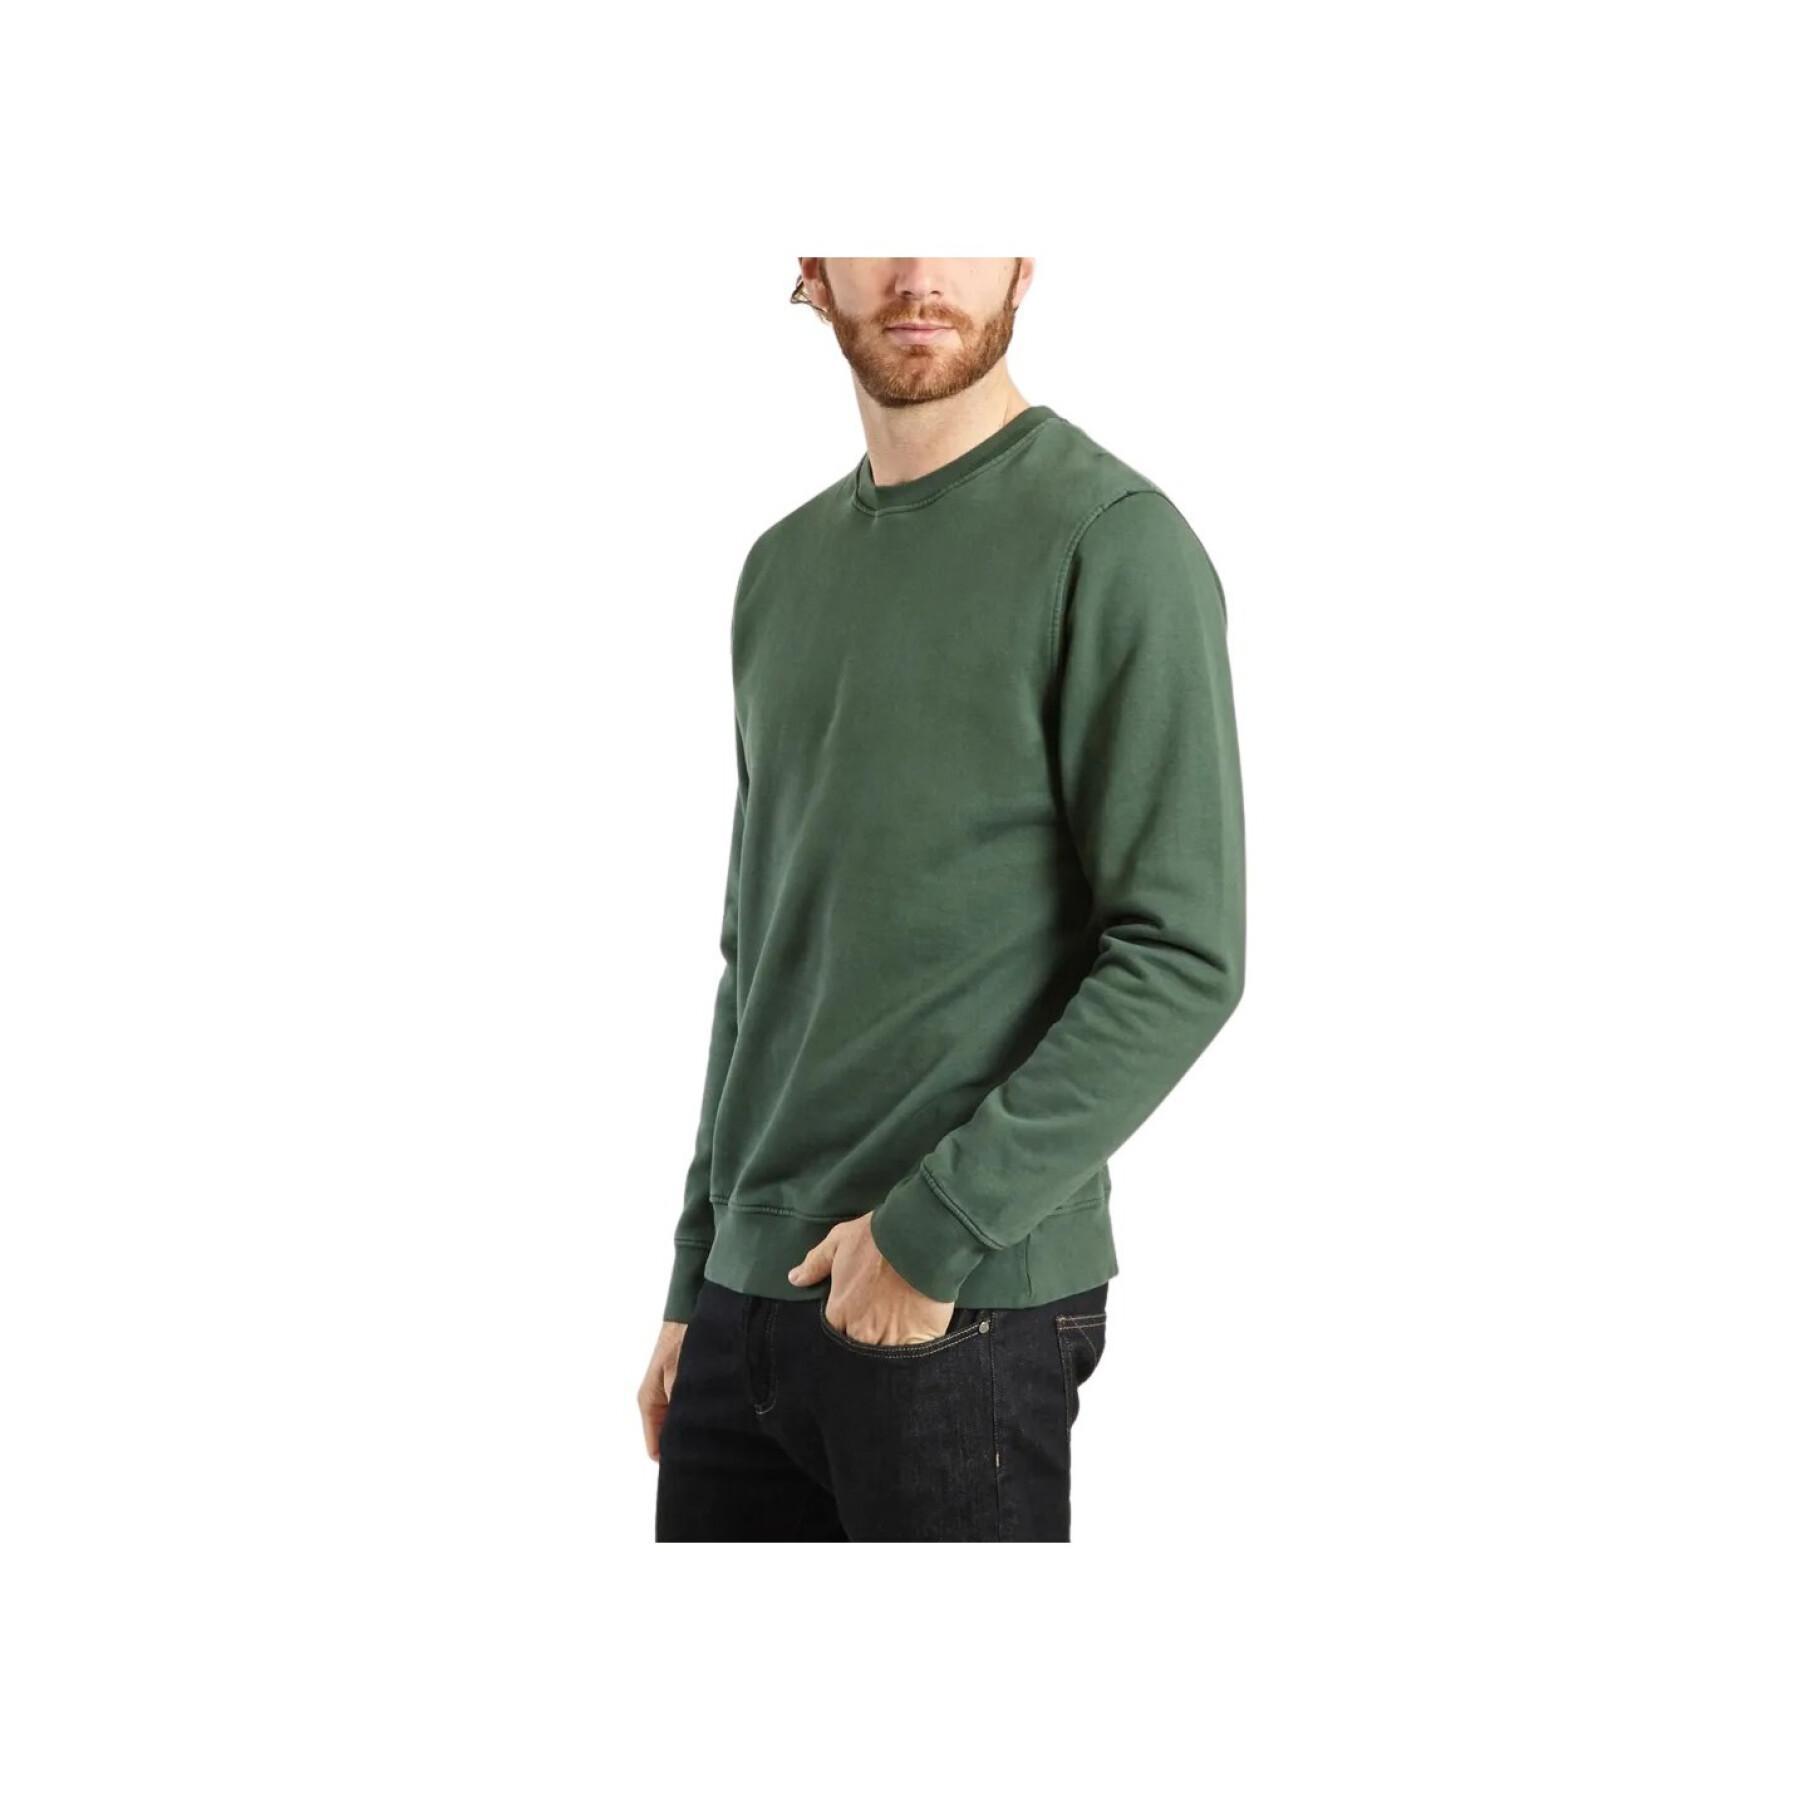 Sweatshirt round neck Colorful Standard Classic Organic emerald green